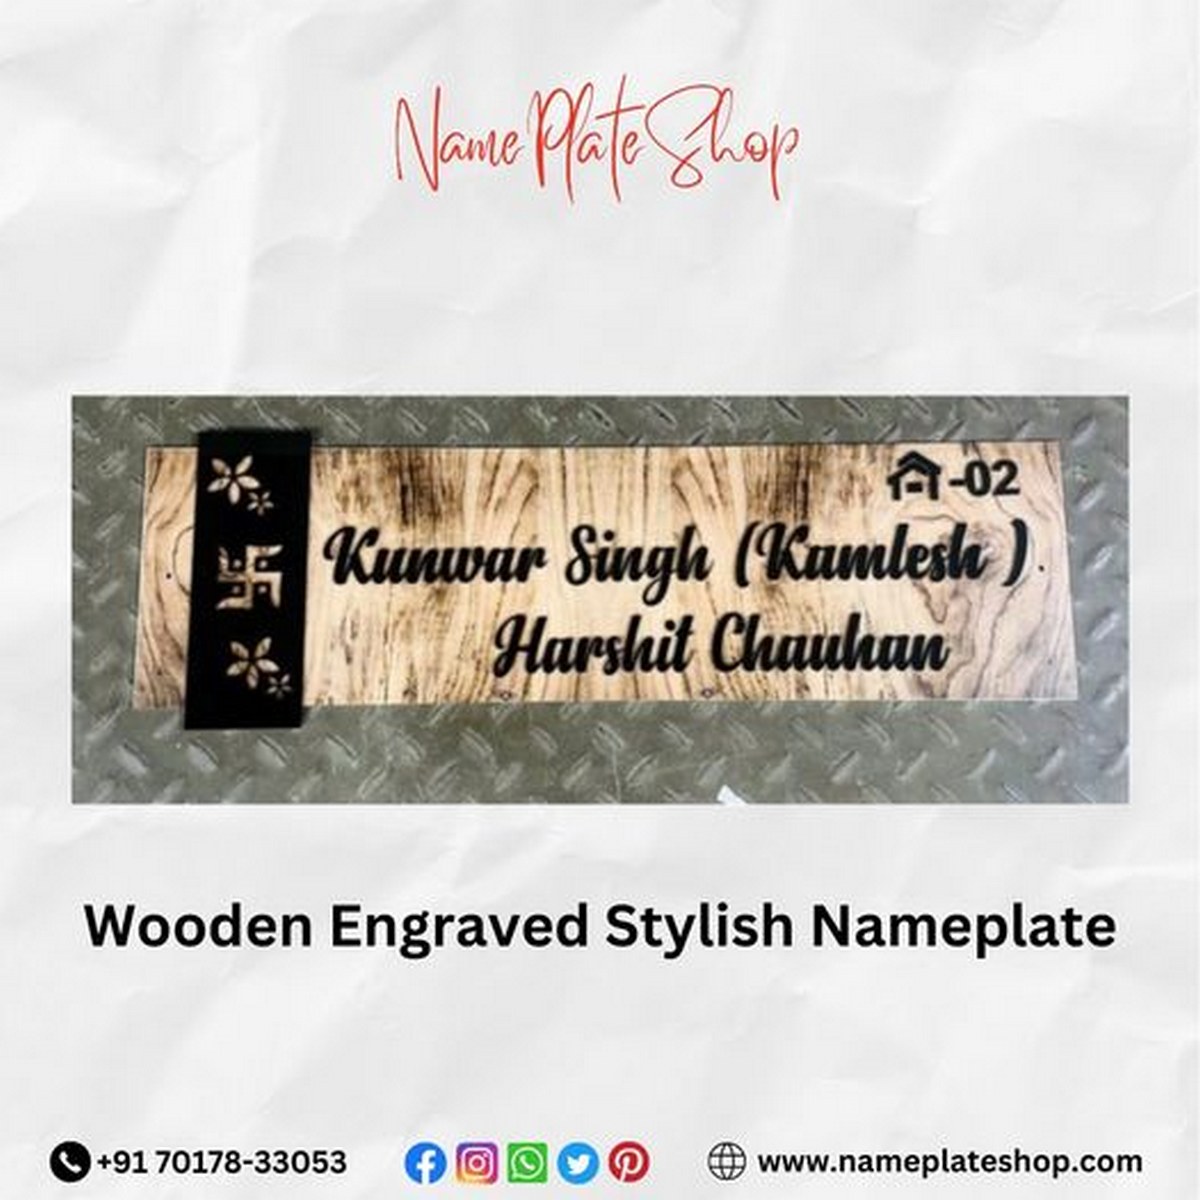 Engraved Wooden Nameplates